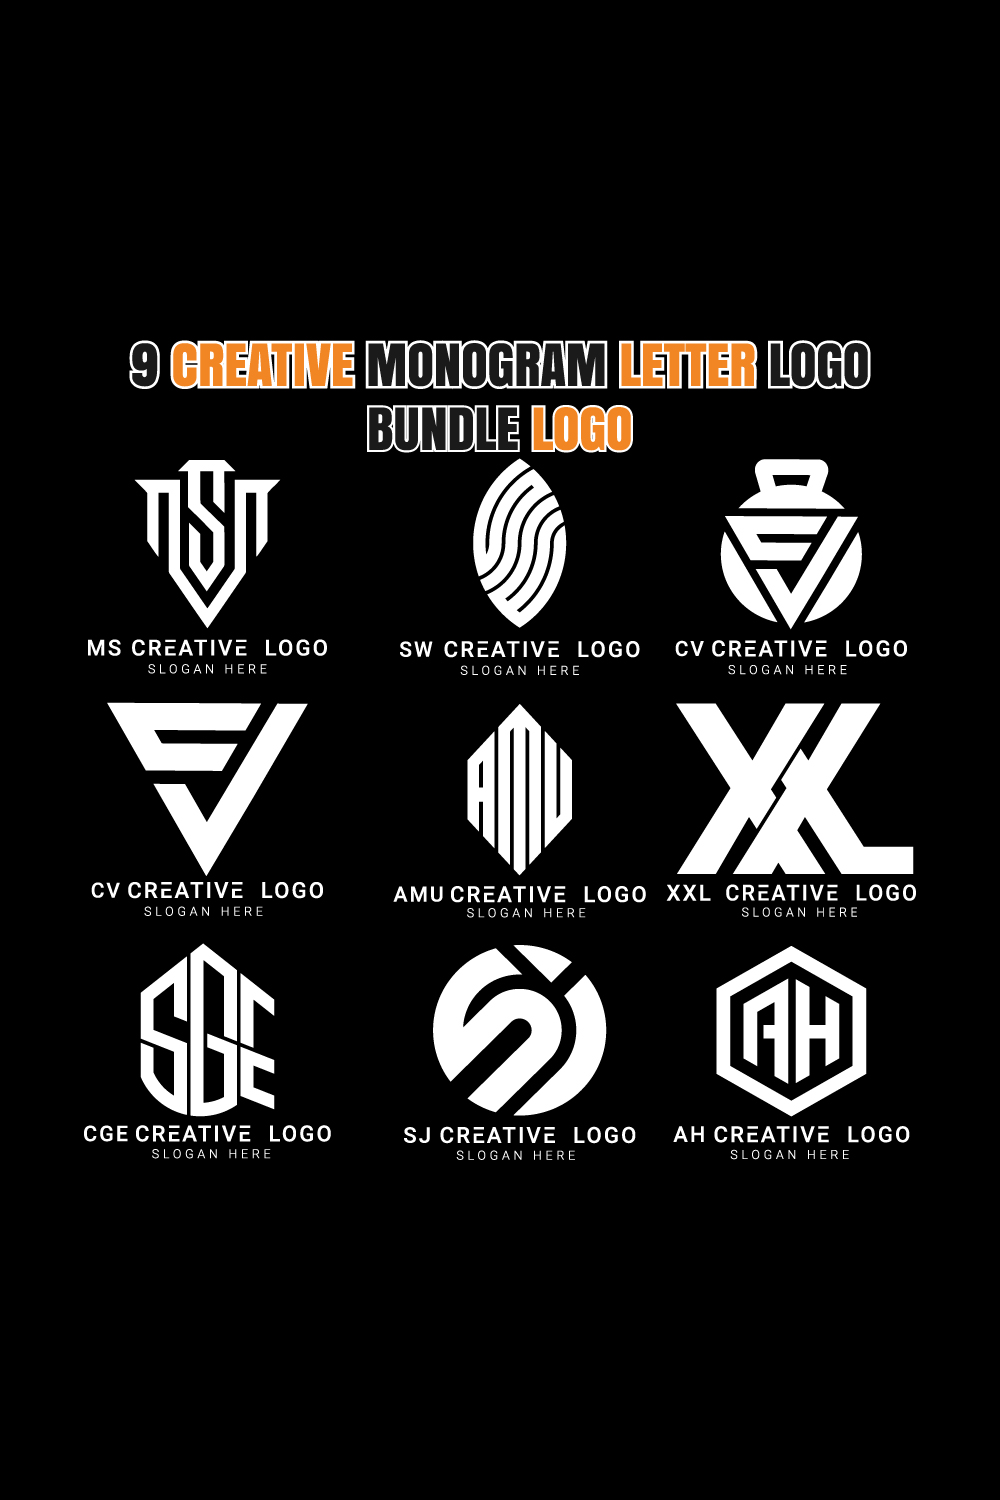 9 Creative Monogram Letter Logo Bundle pinterest image.